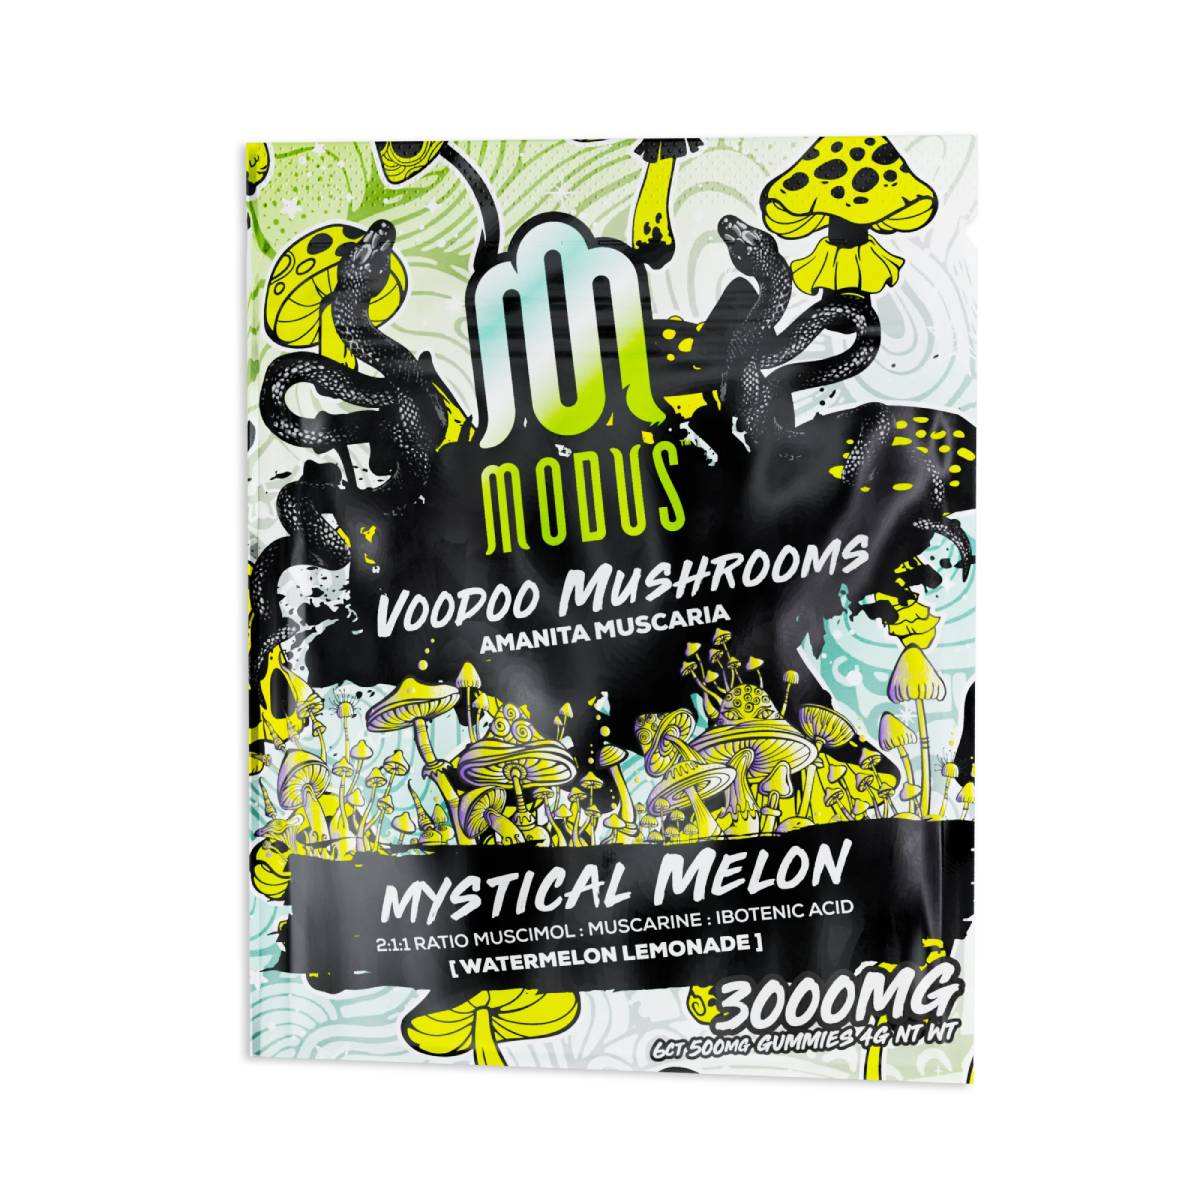 Modus Voodoo Mushrooms Amanita Muscaria Mystical Melon Gummies (3000mg) - BudMother.com